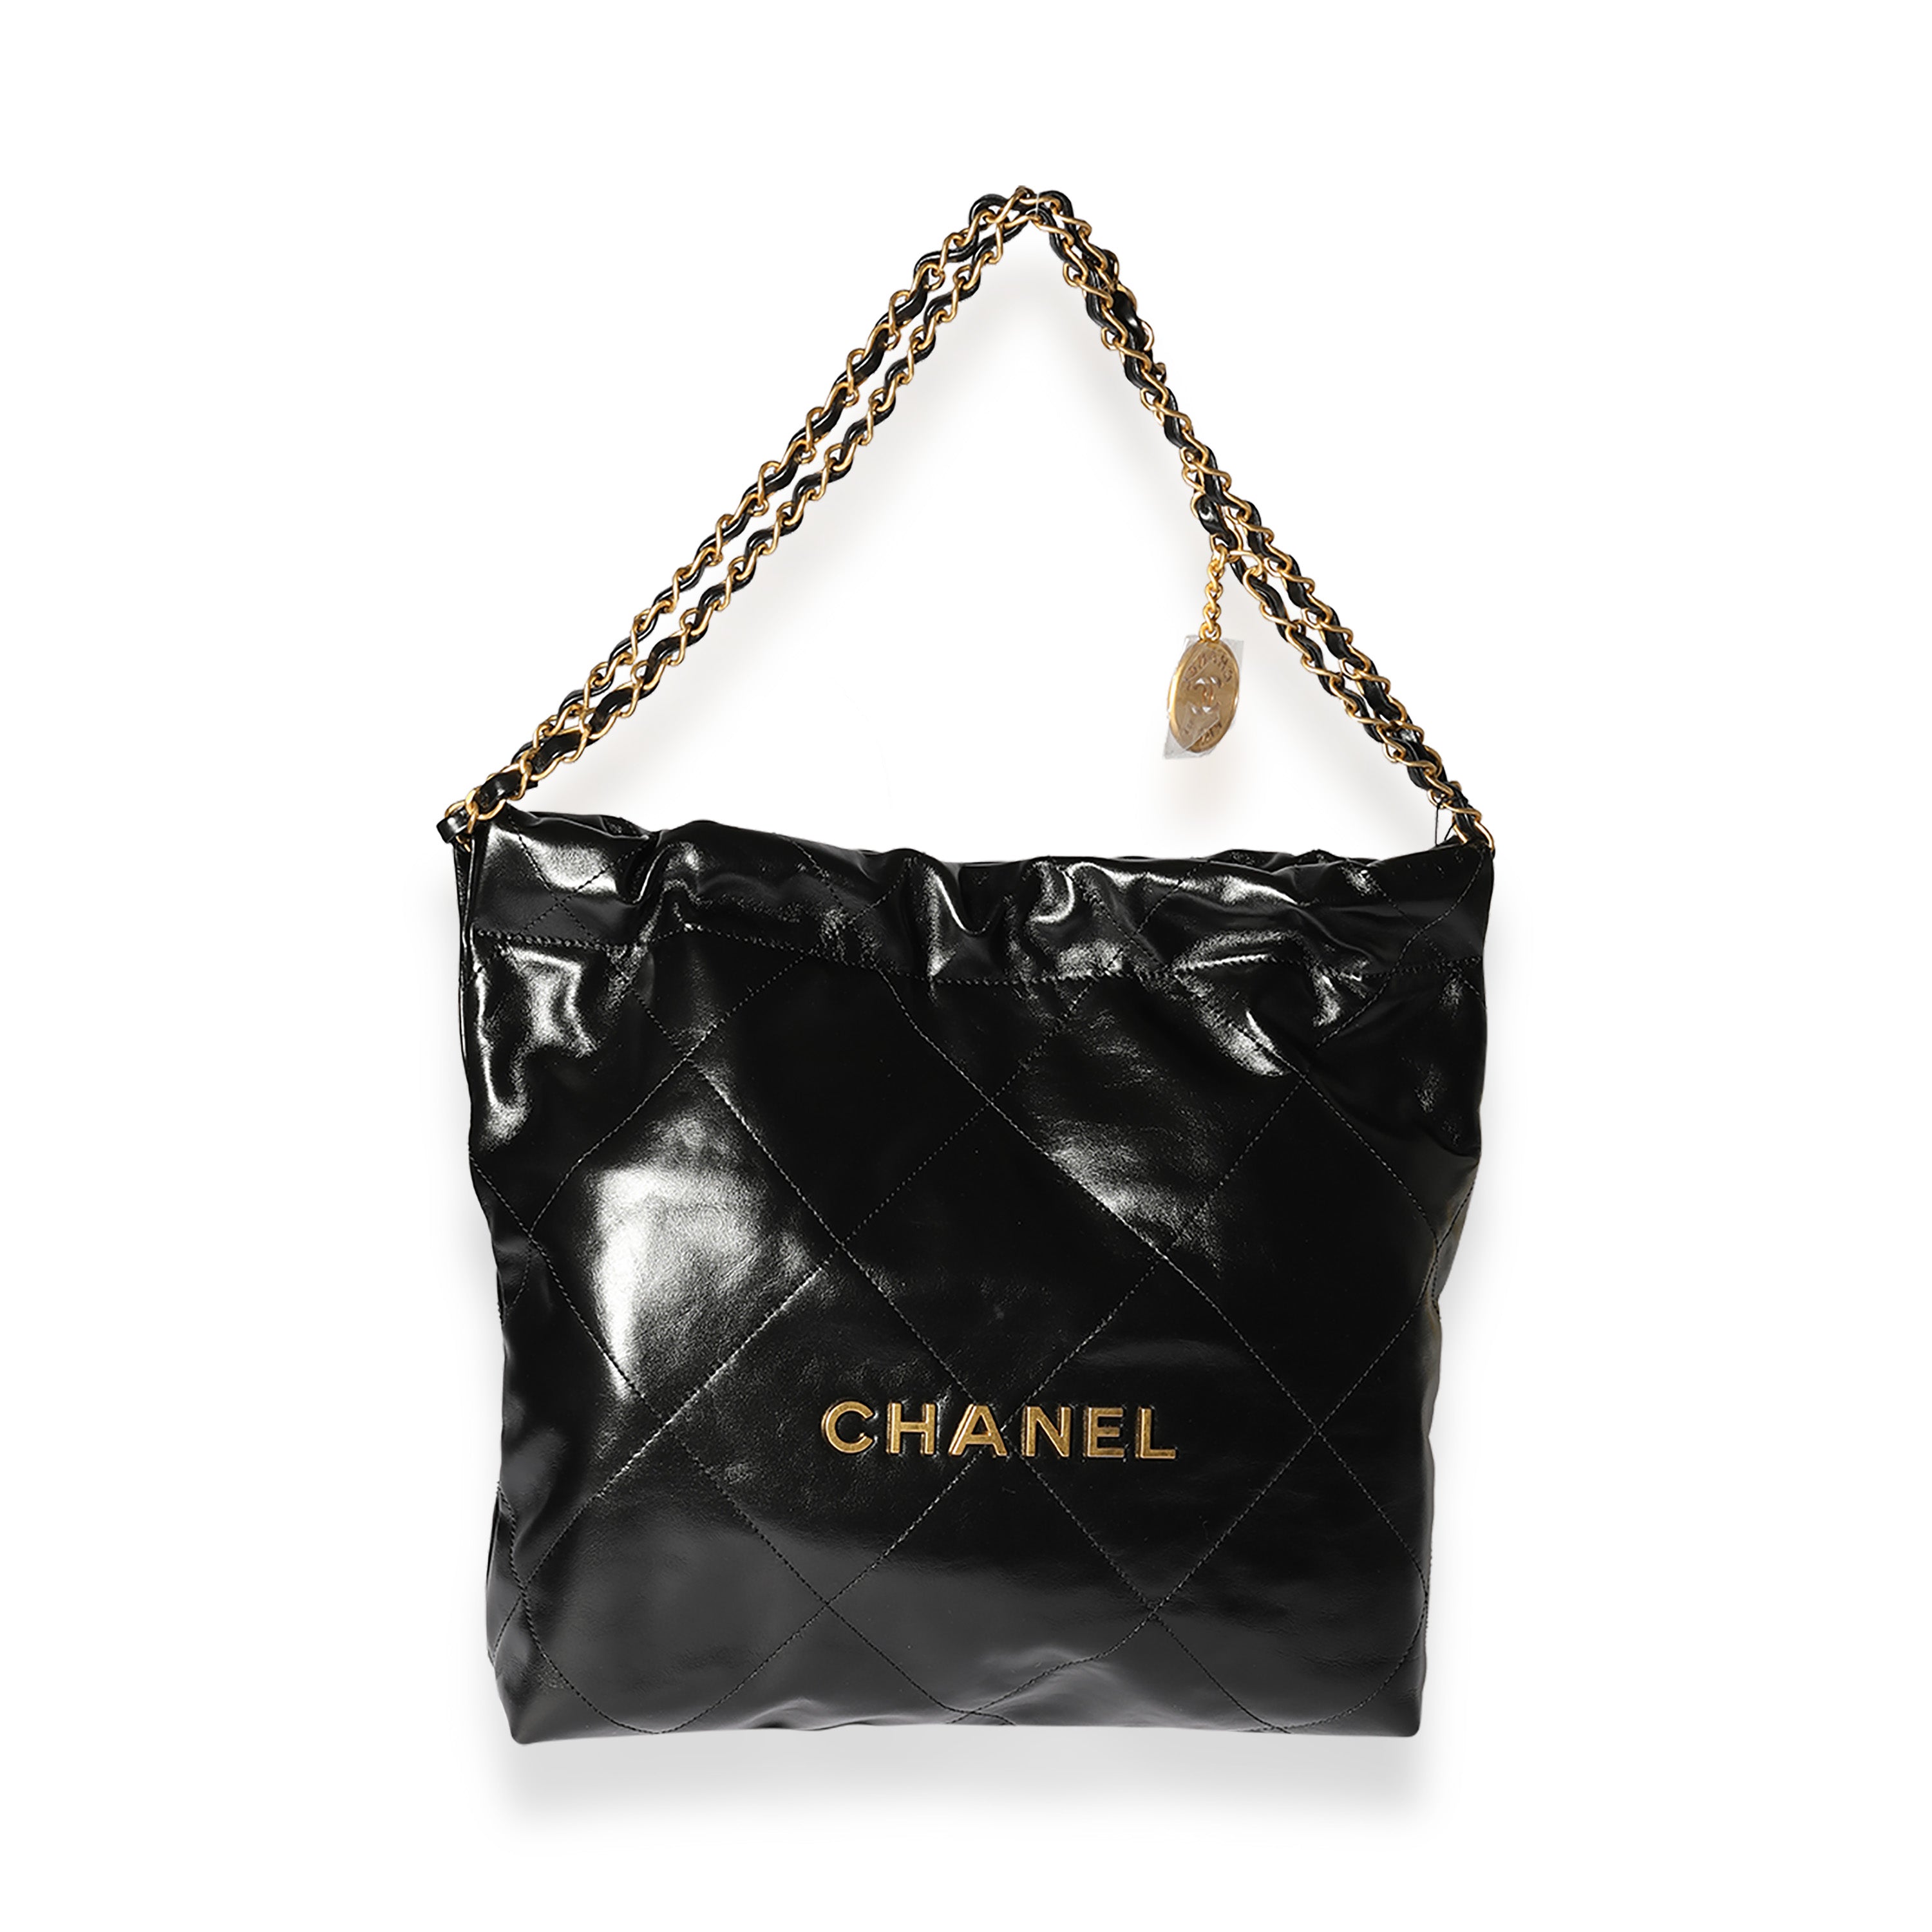 black and white chanel gift bag